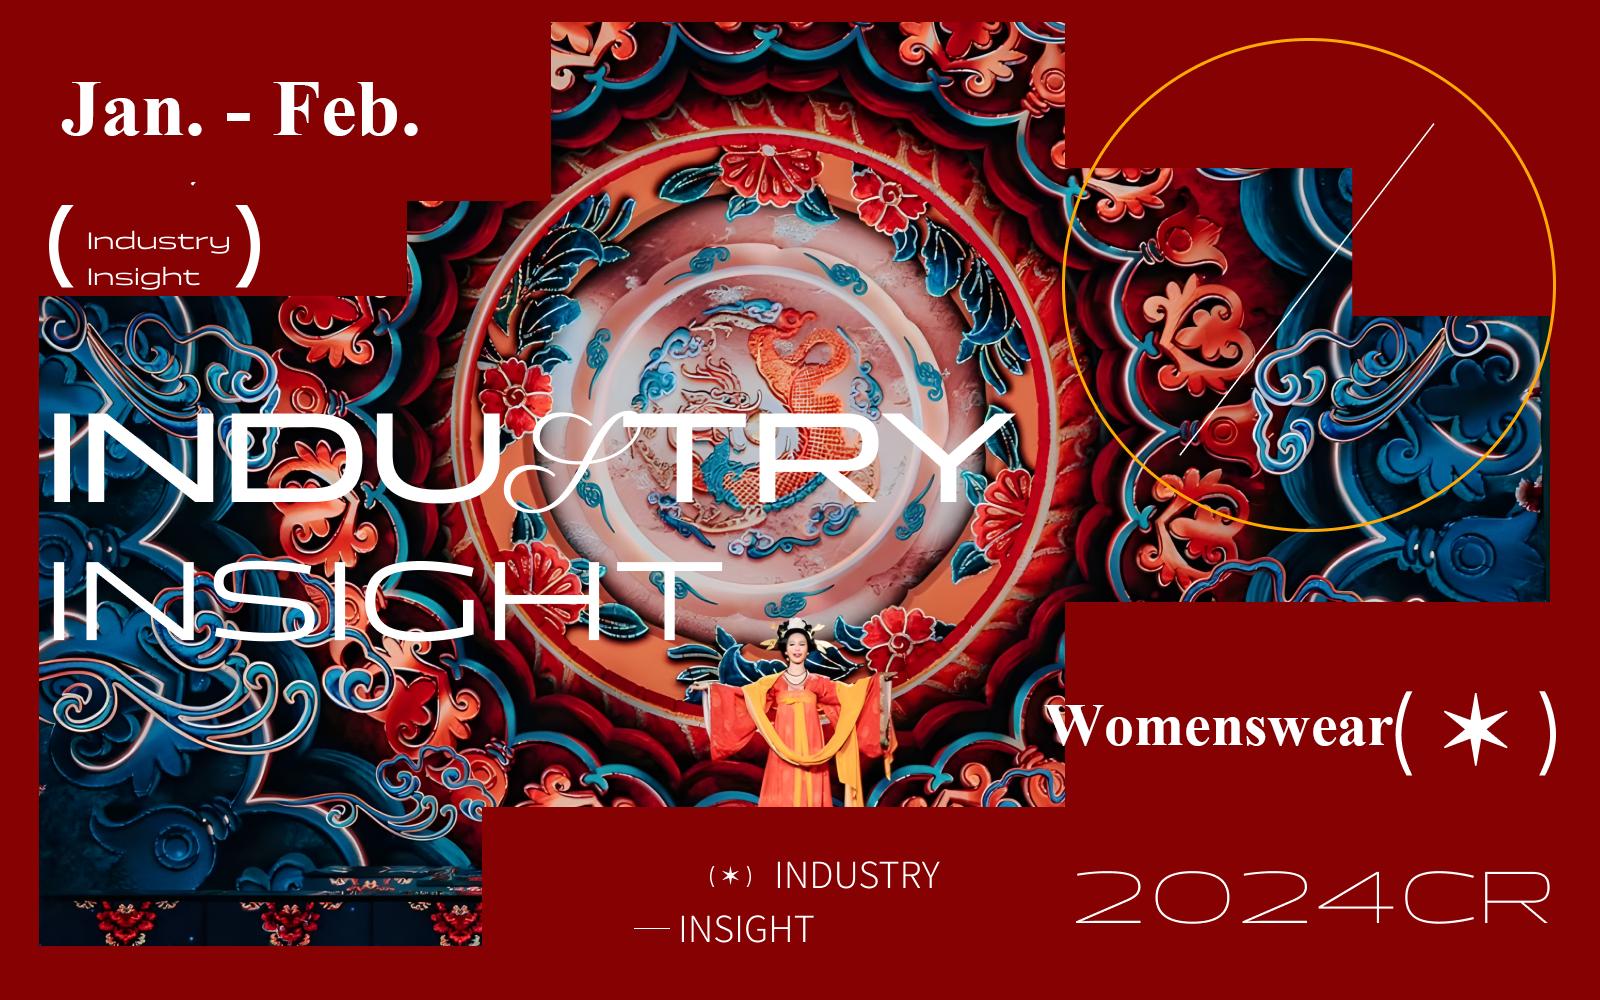 January-February 2024 -- The Industry Insight of Womenswear